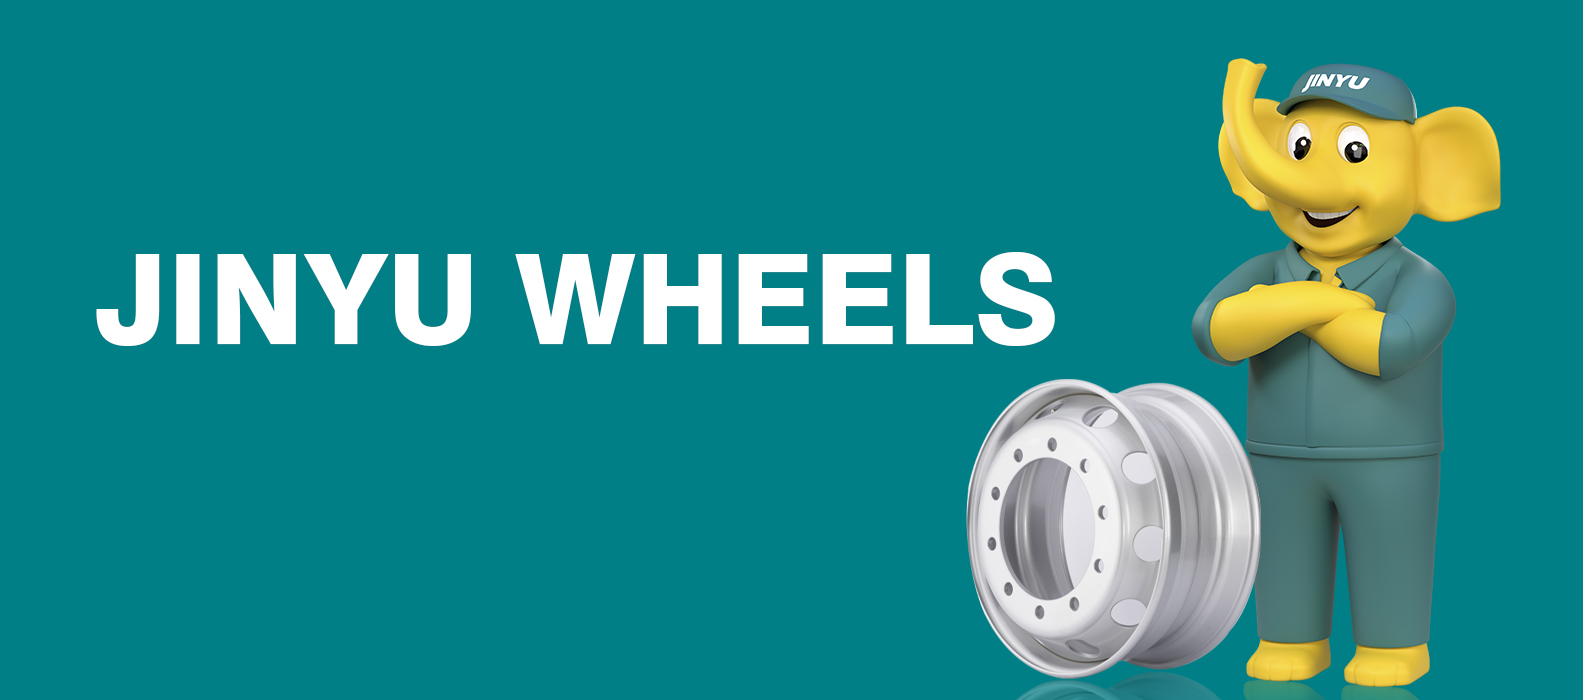 jinyu wheels